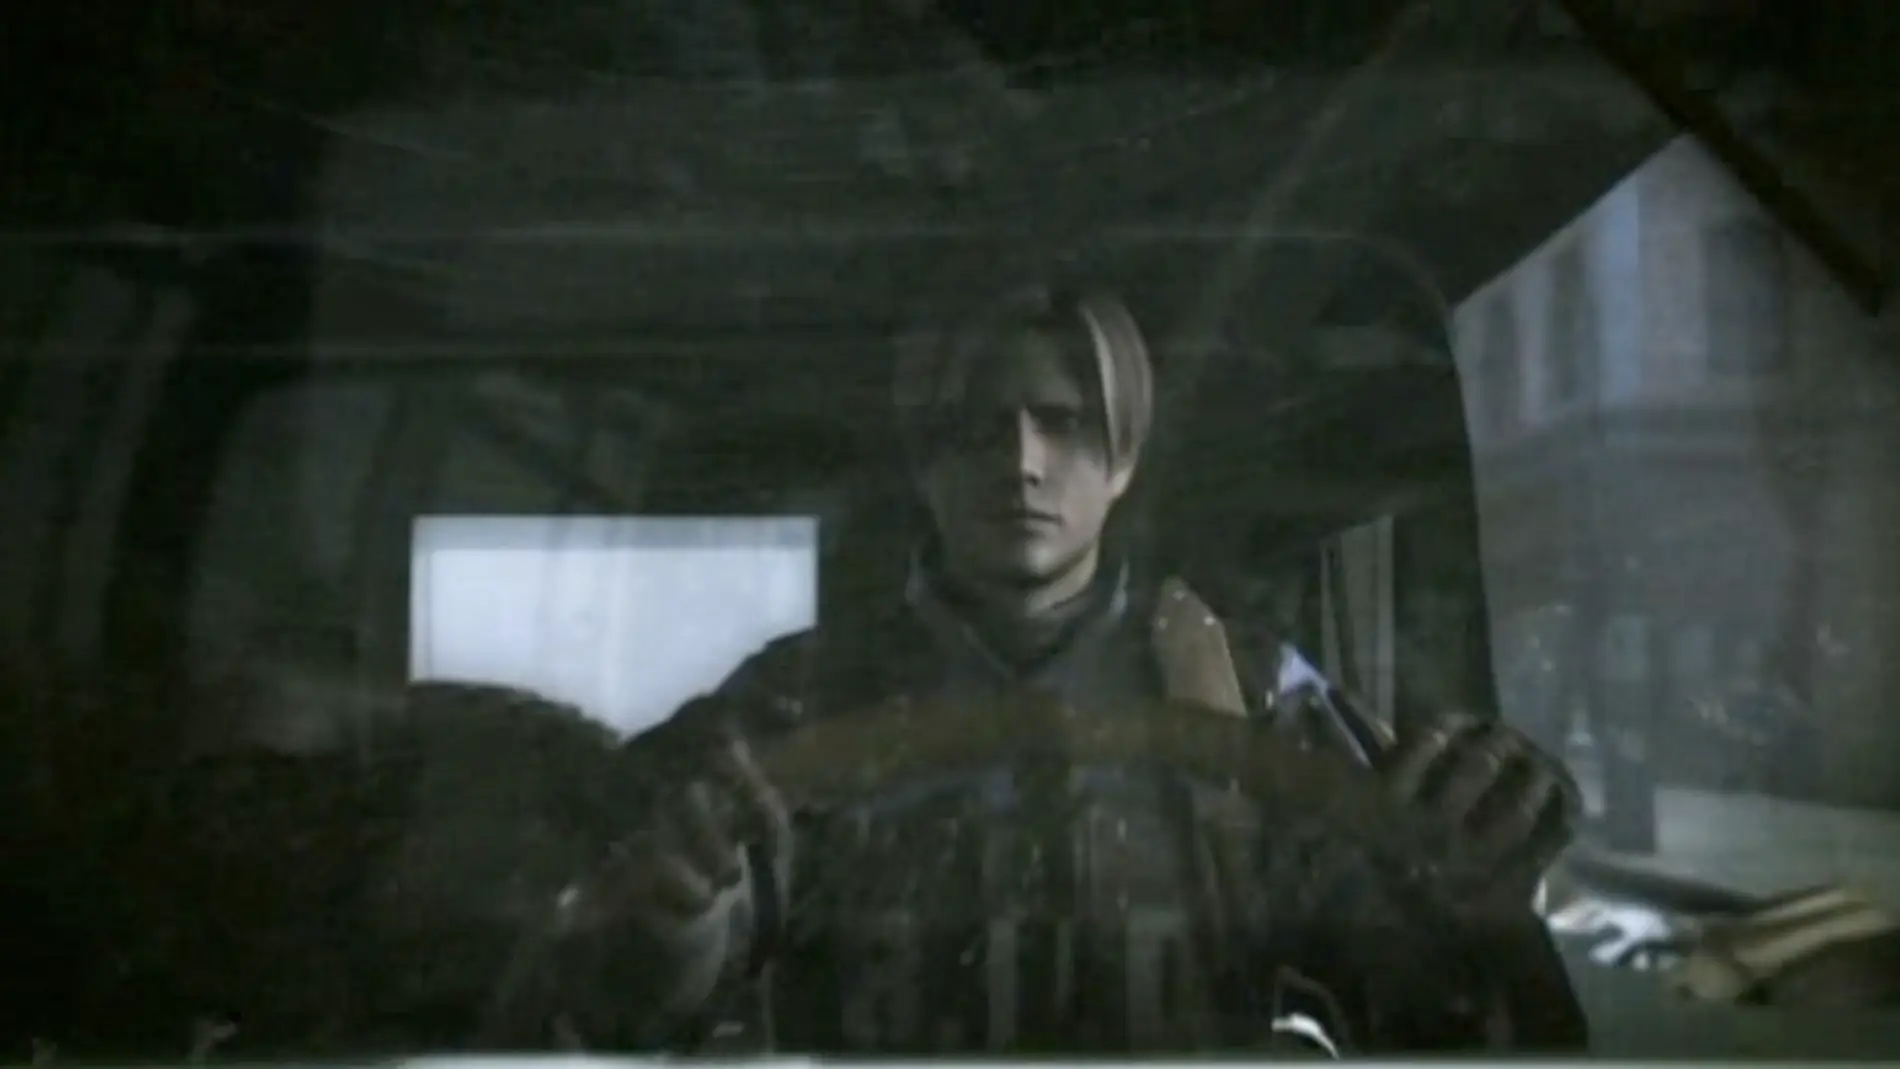 Resident Evil: Operation Raccon City